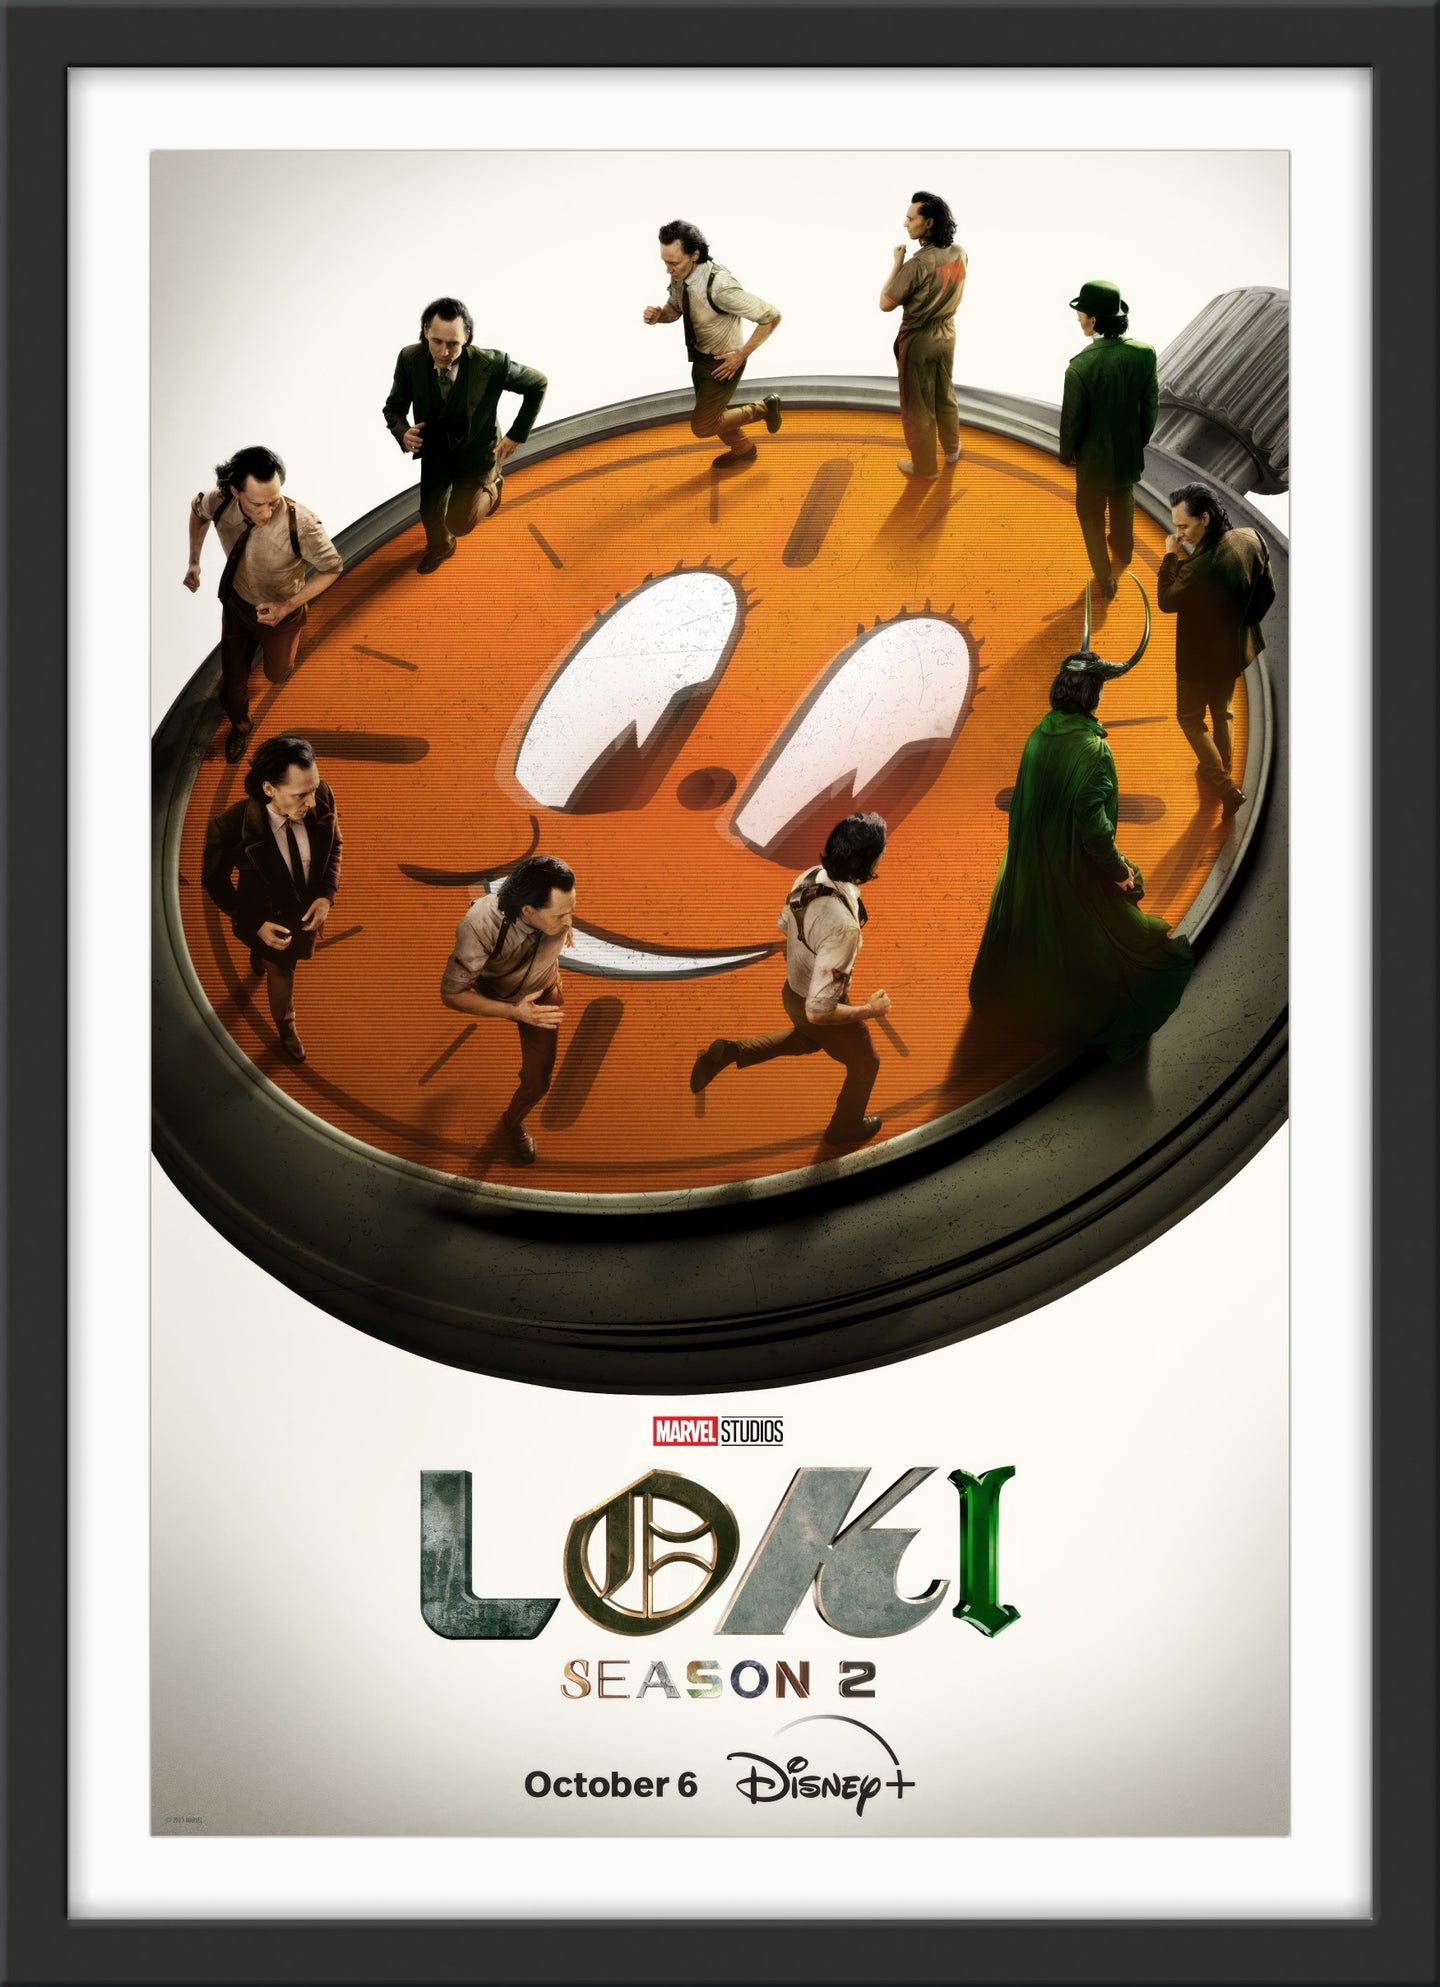 An original movie poster for Season 2 of the Marvel Disney+ TV seris Loki